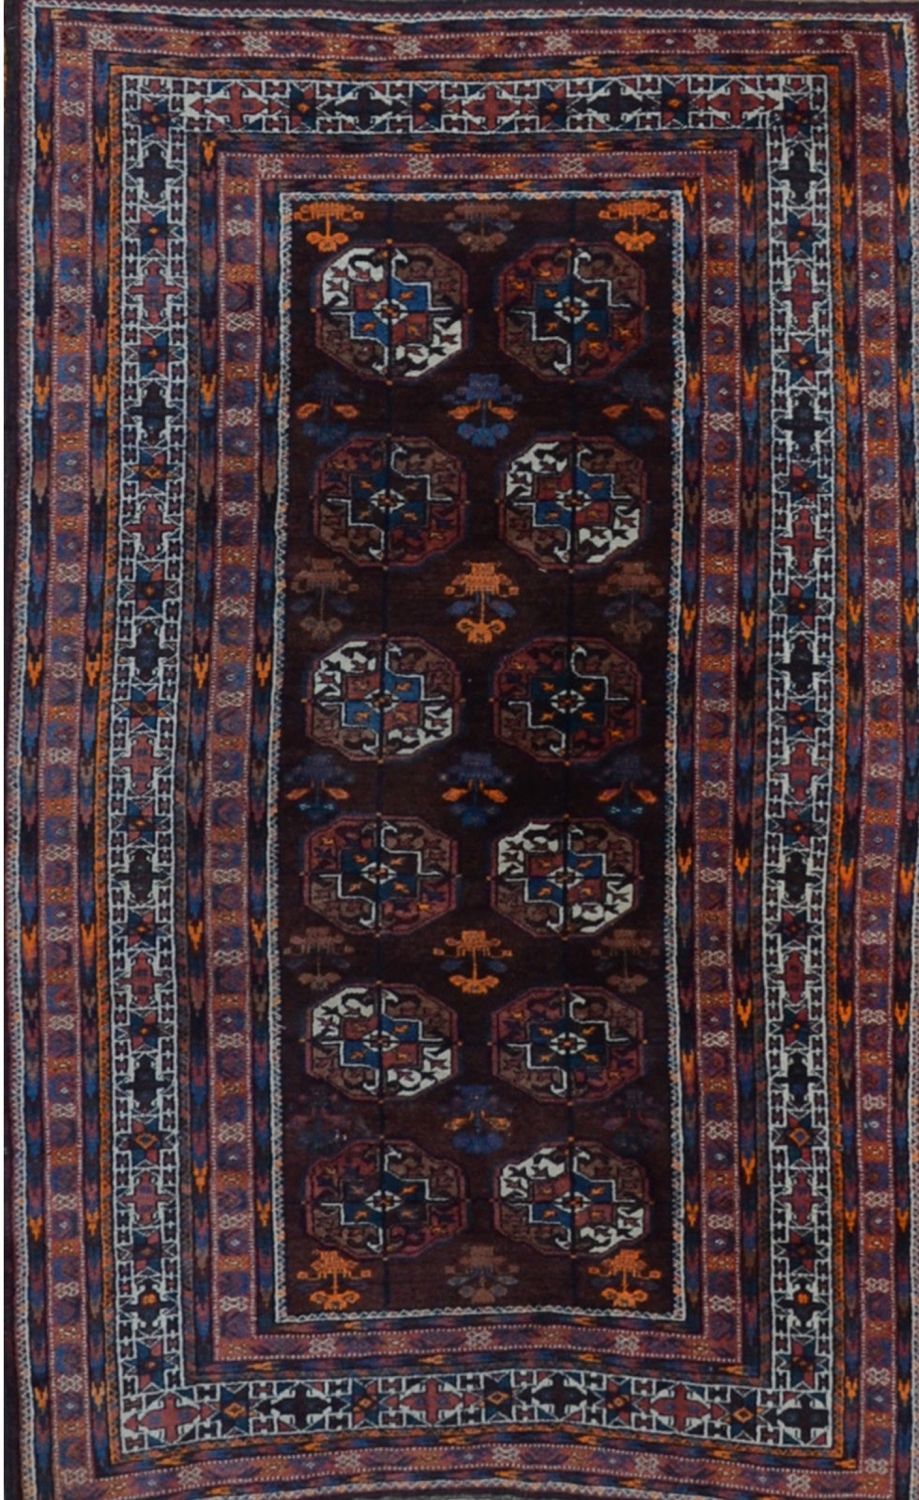 Null 前俾路支省

土库曼人

约1940年

尺寸200 x 118厘米

技术特点

羊毛天鹅绒，棉质底板

让人联想到布哈拉地毯的装饰

石榴石场，有&hellip;